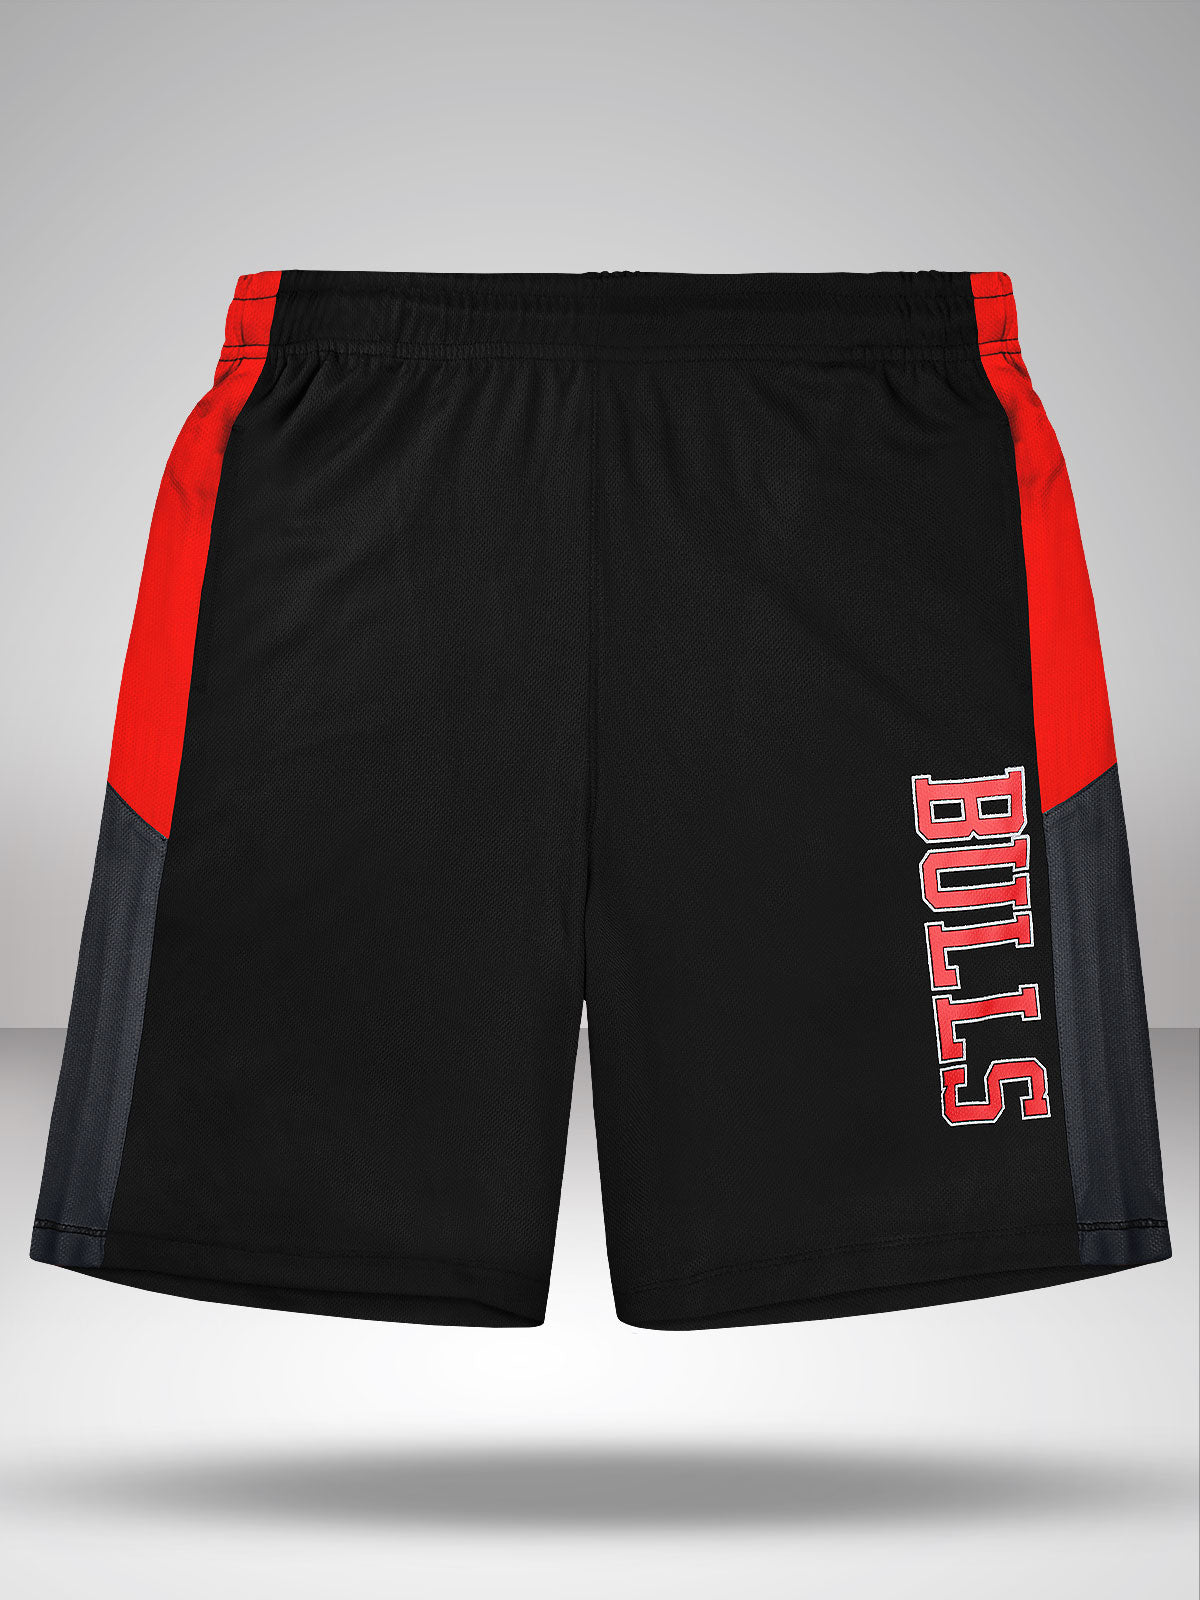 NBA, Shorts, Authentic Nba Logo Mens Training Workout Basketball Shorts  Black Nwt